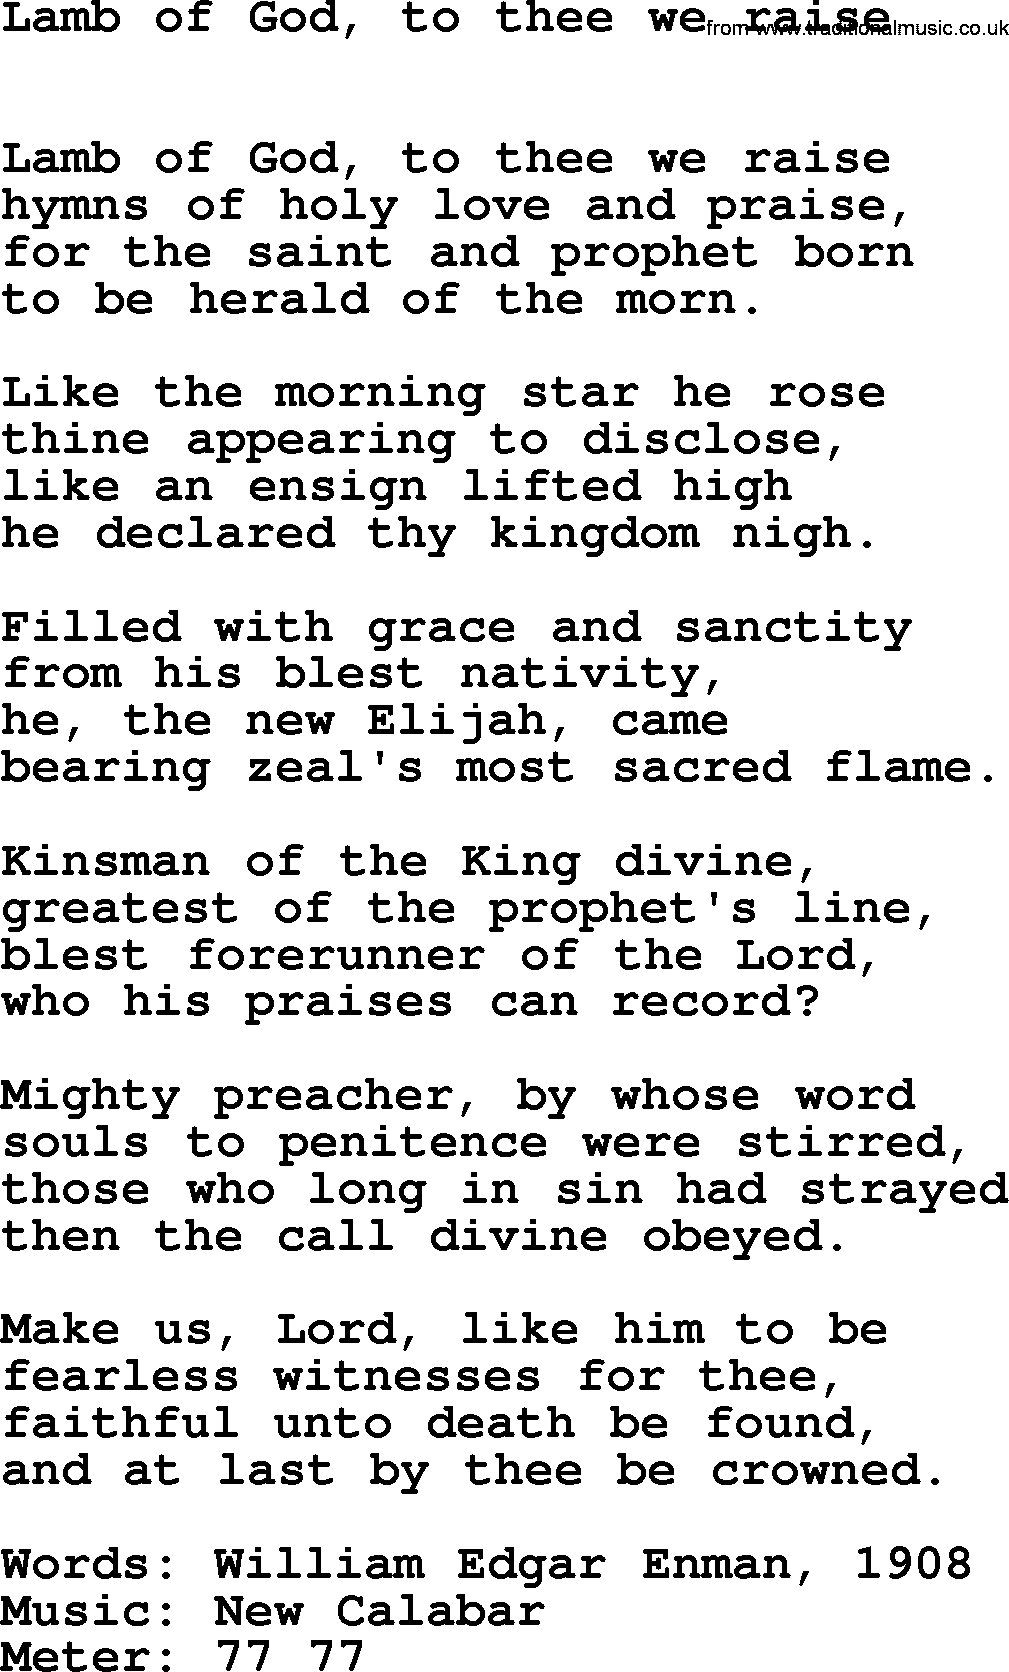 Book of Common Praise Hymn: Lamb Of God, To Thee We Raise.txt lyrics with midi music